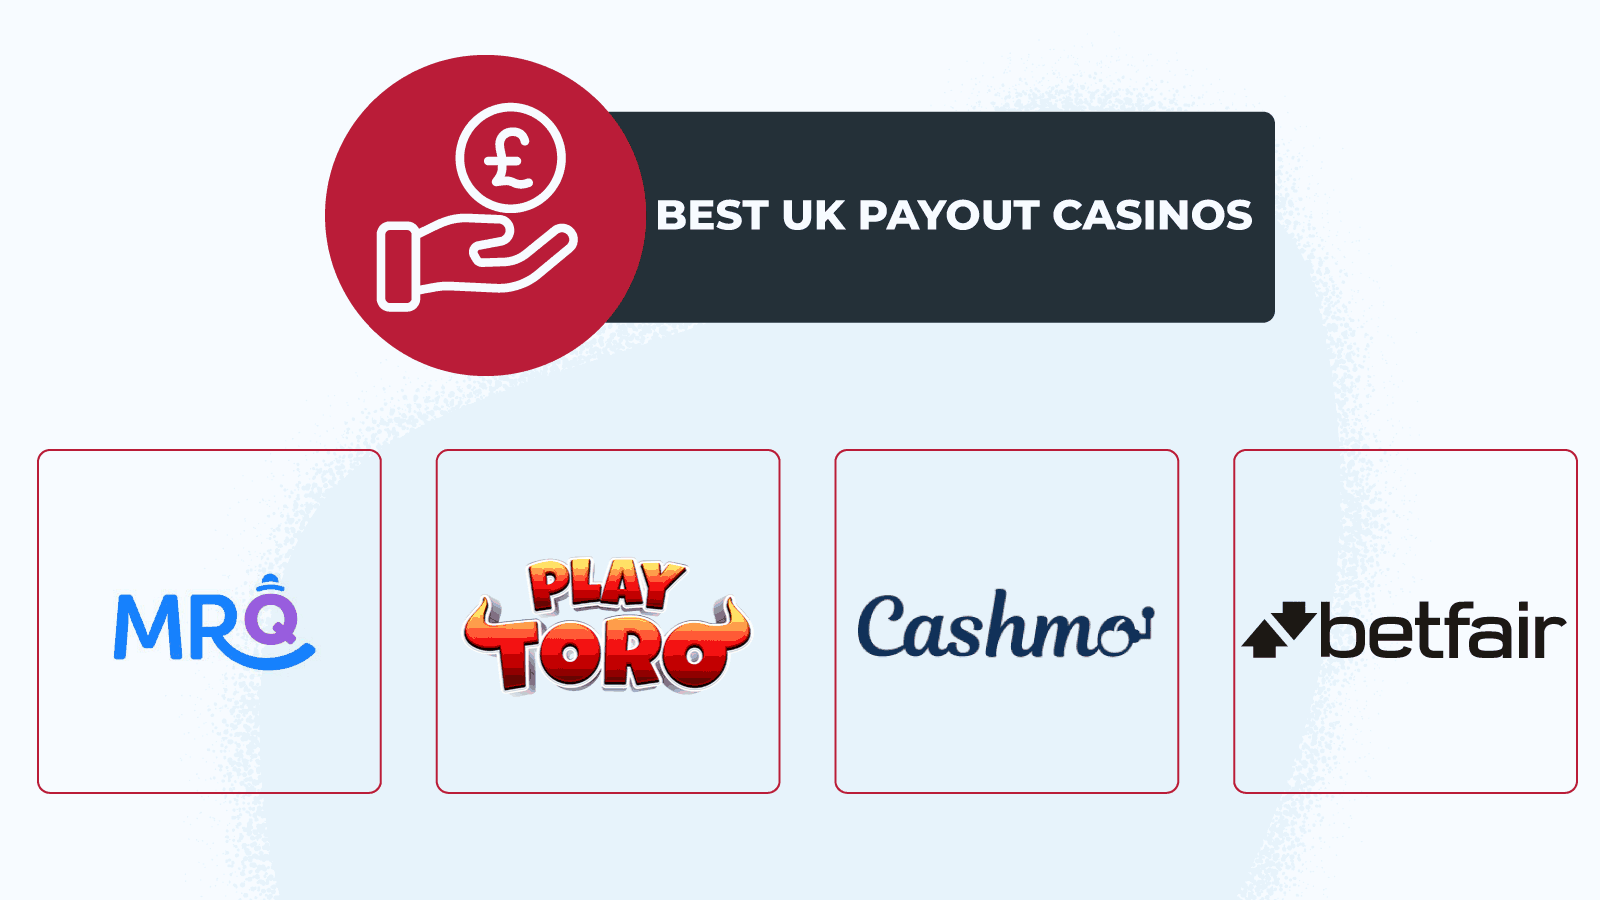 Best UK Payout Casinos